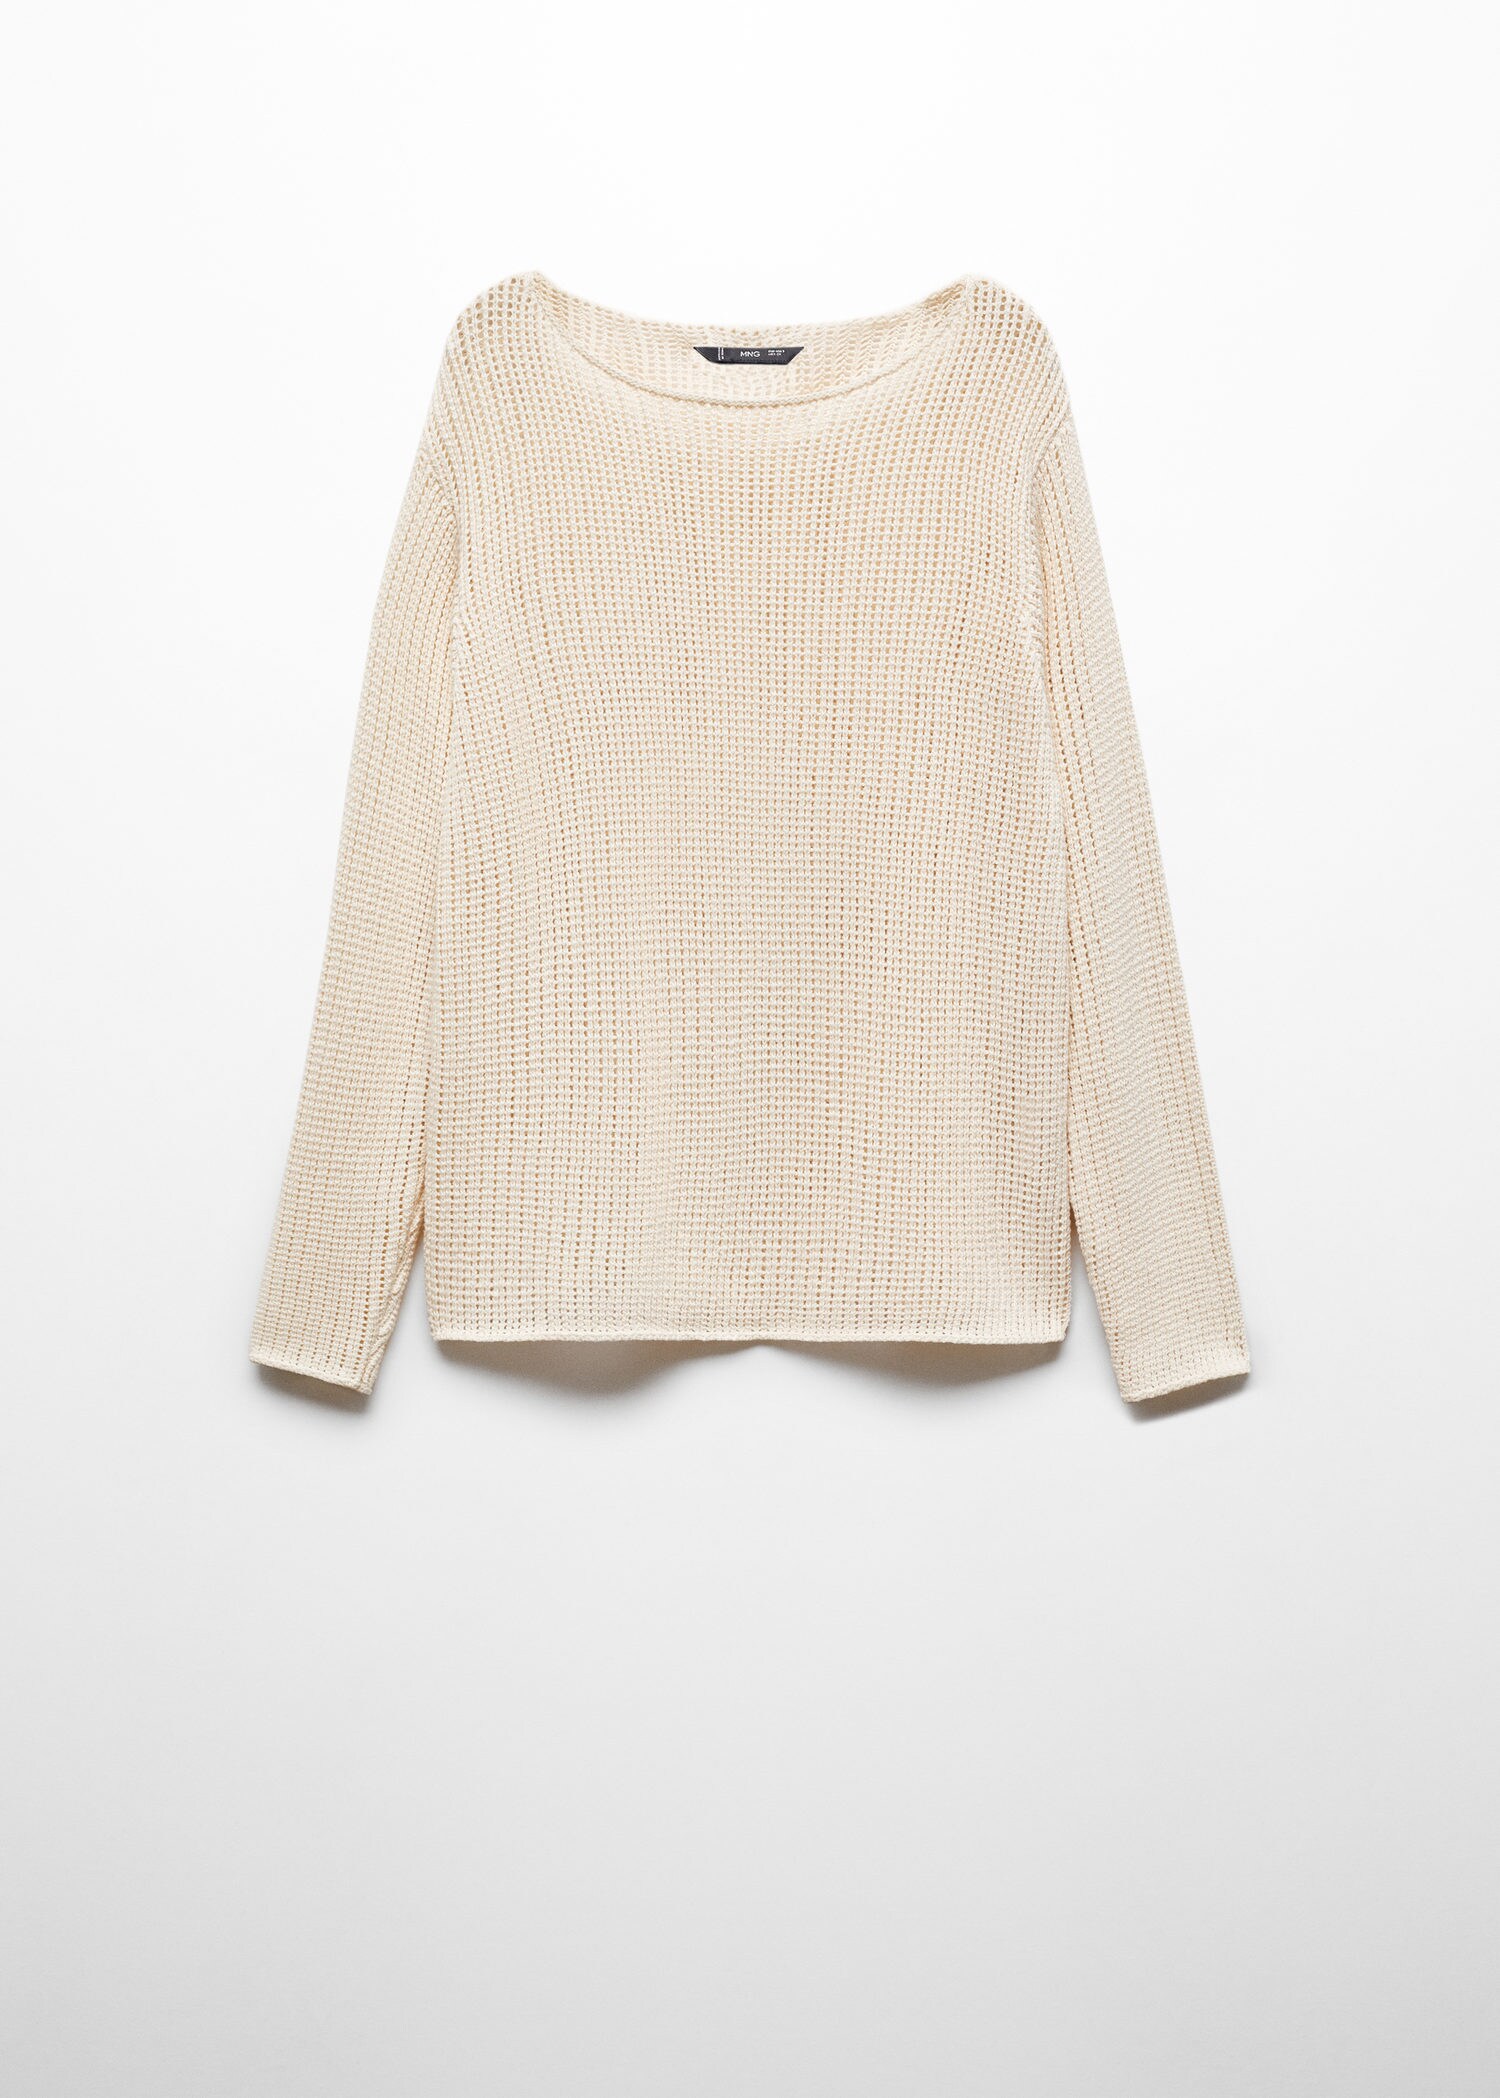 Boat-neck knitted sweater | MANGO